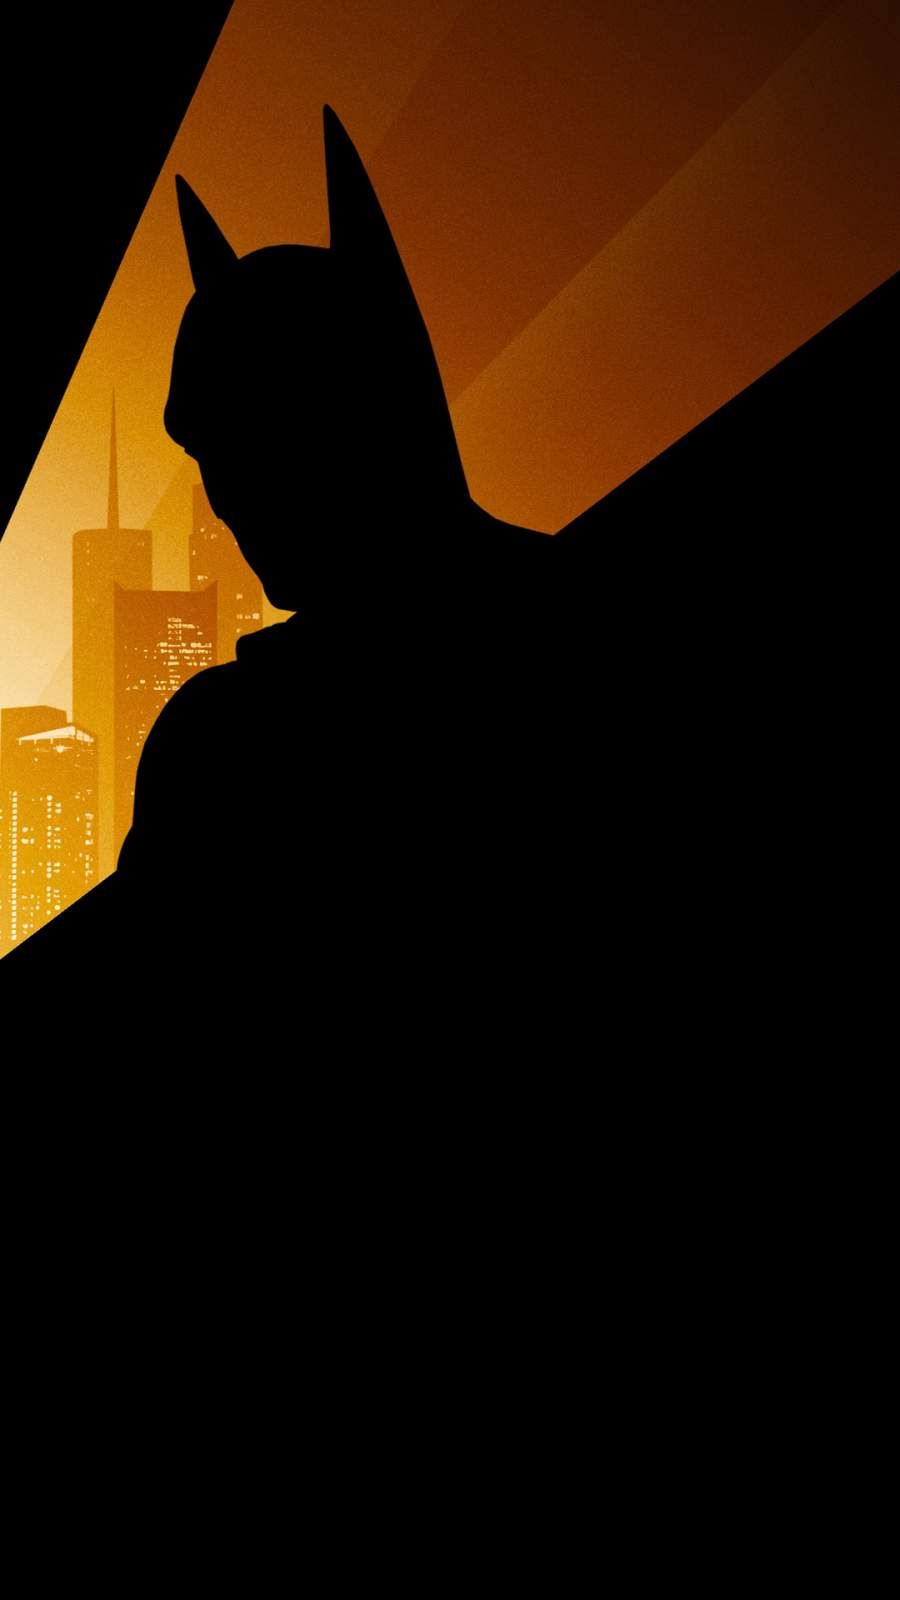 Batman Silhouette iPhone Wallpaper Wallpaper, iPhone Wallpaper